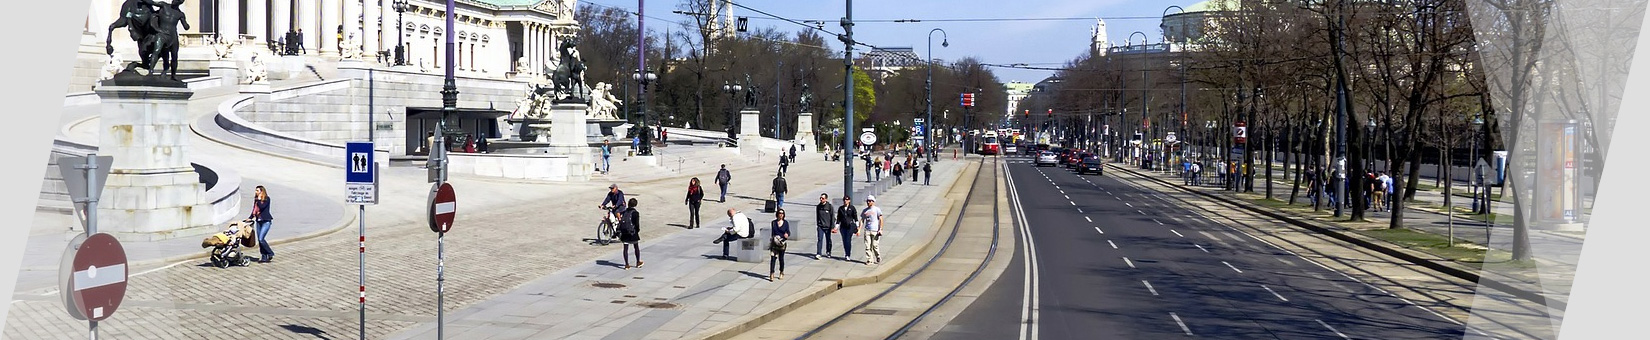 Foto Parlament mit Fußgängerverkehr